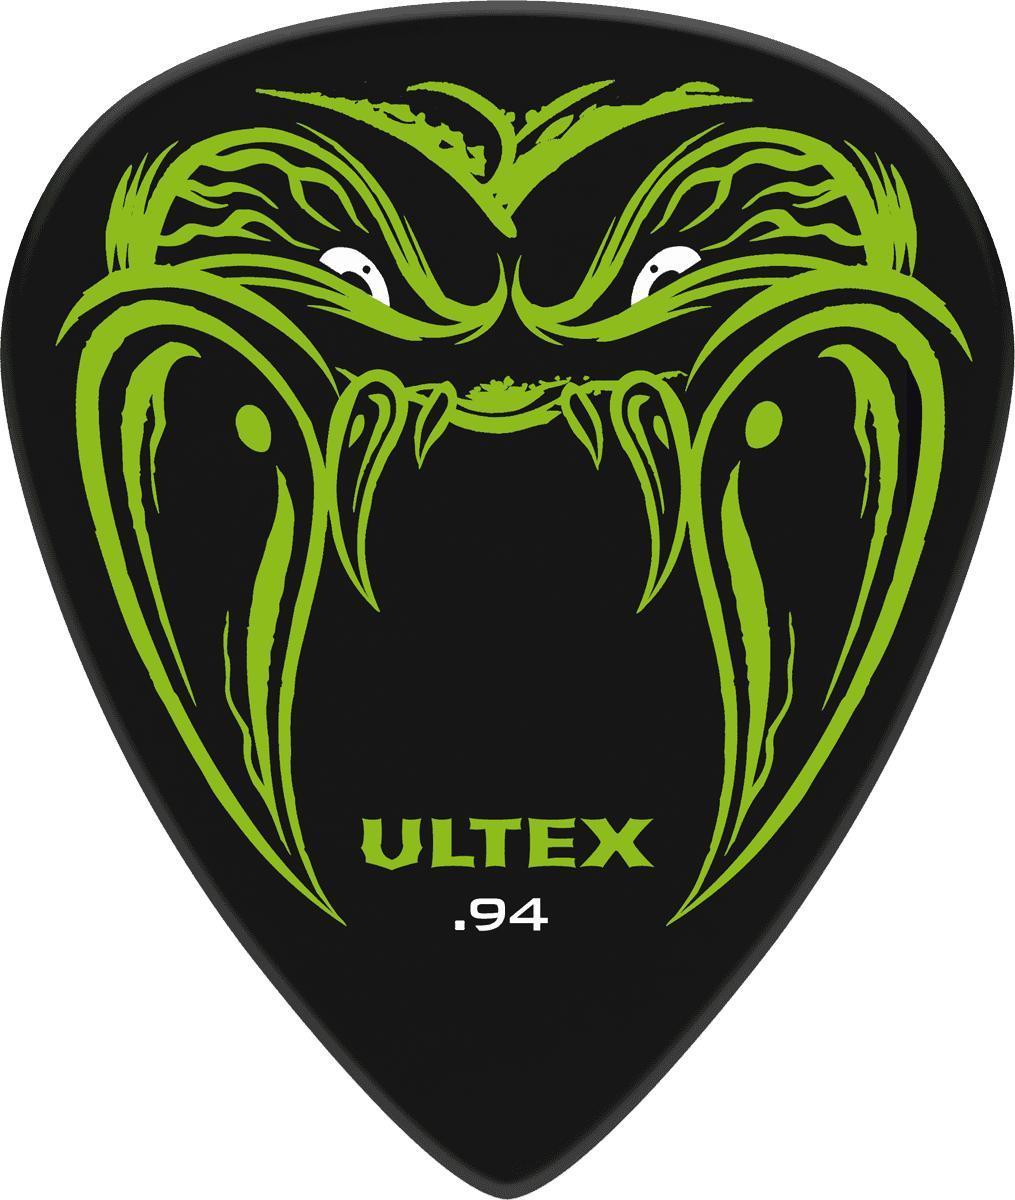 Guitar pick Jim dunlop Ultex Hetfield's Black Fang 0,94mm (x6)